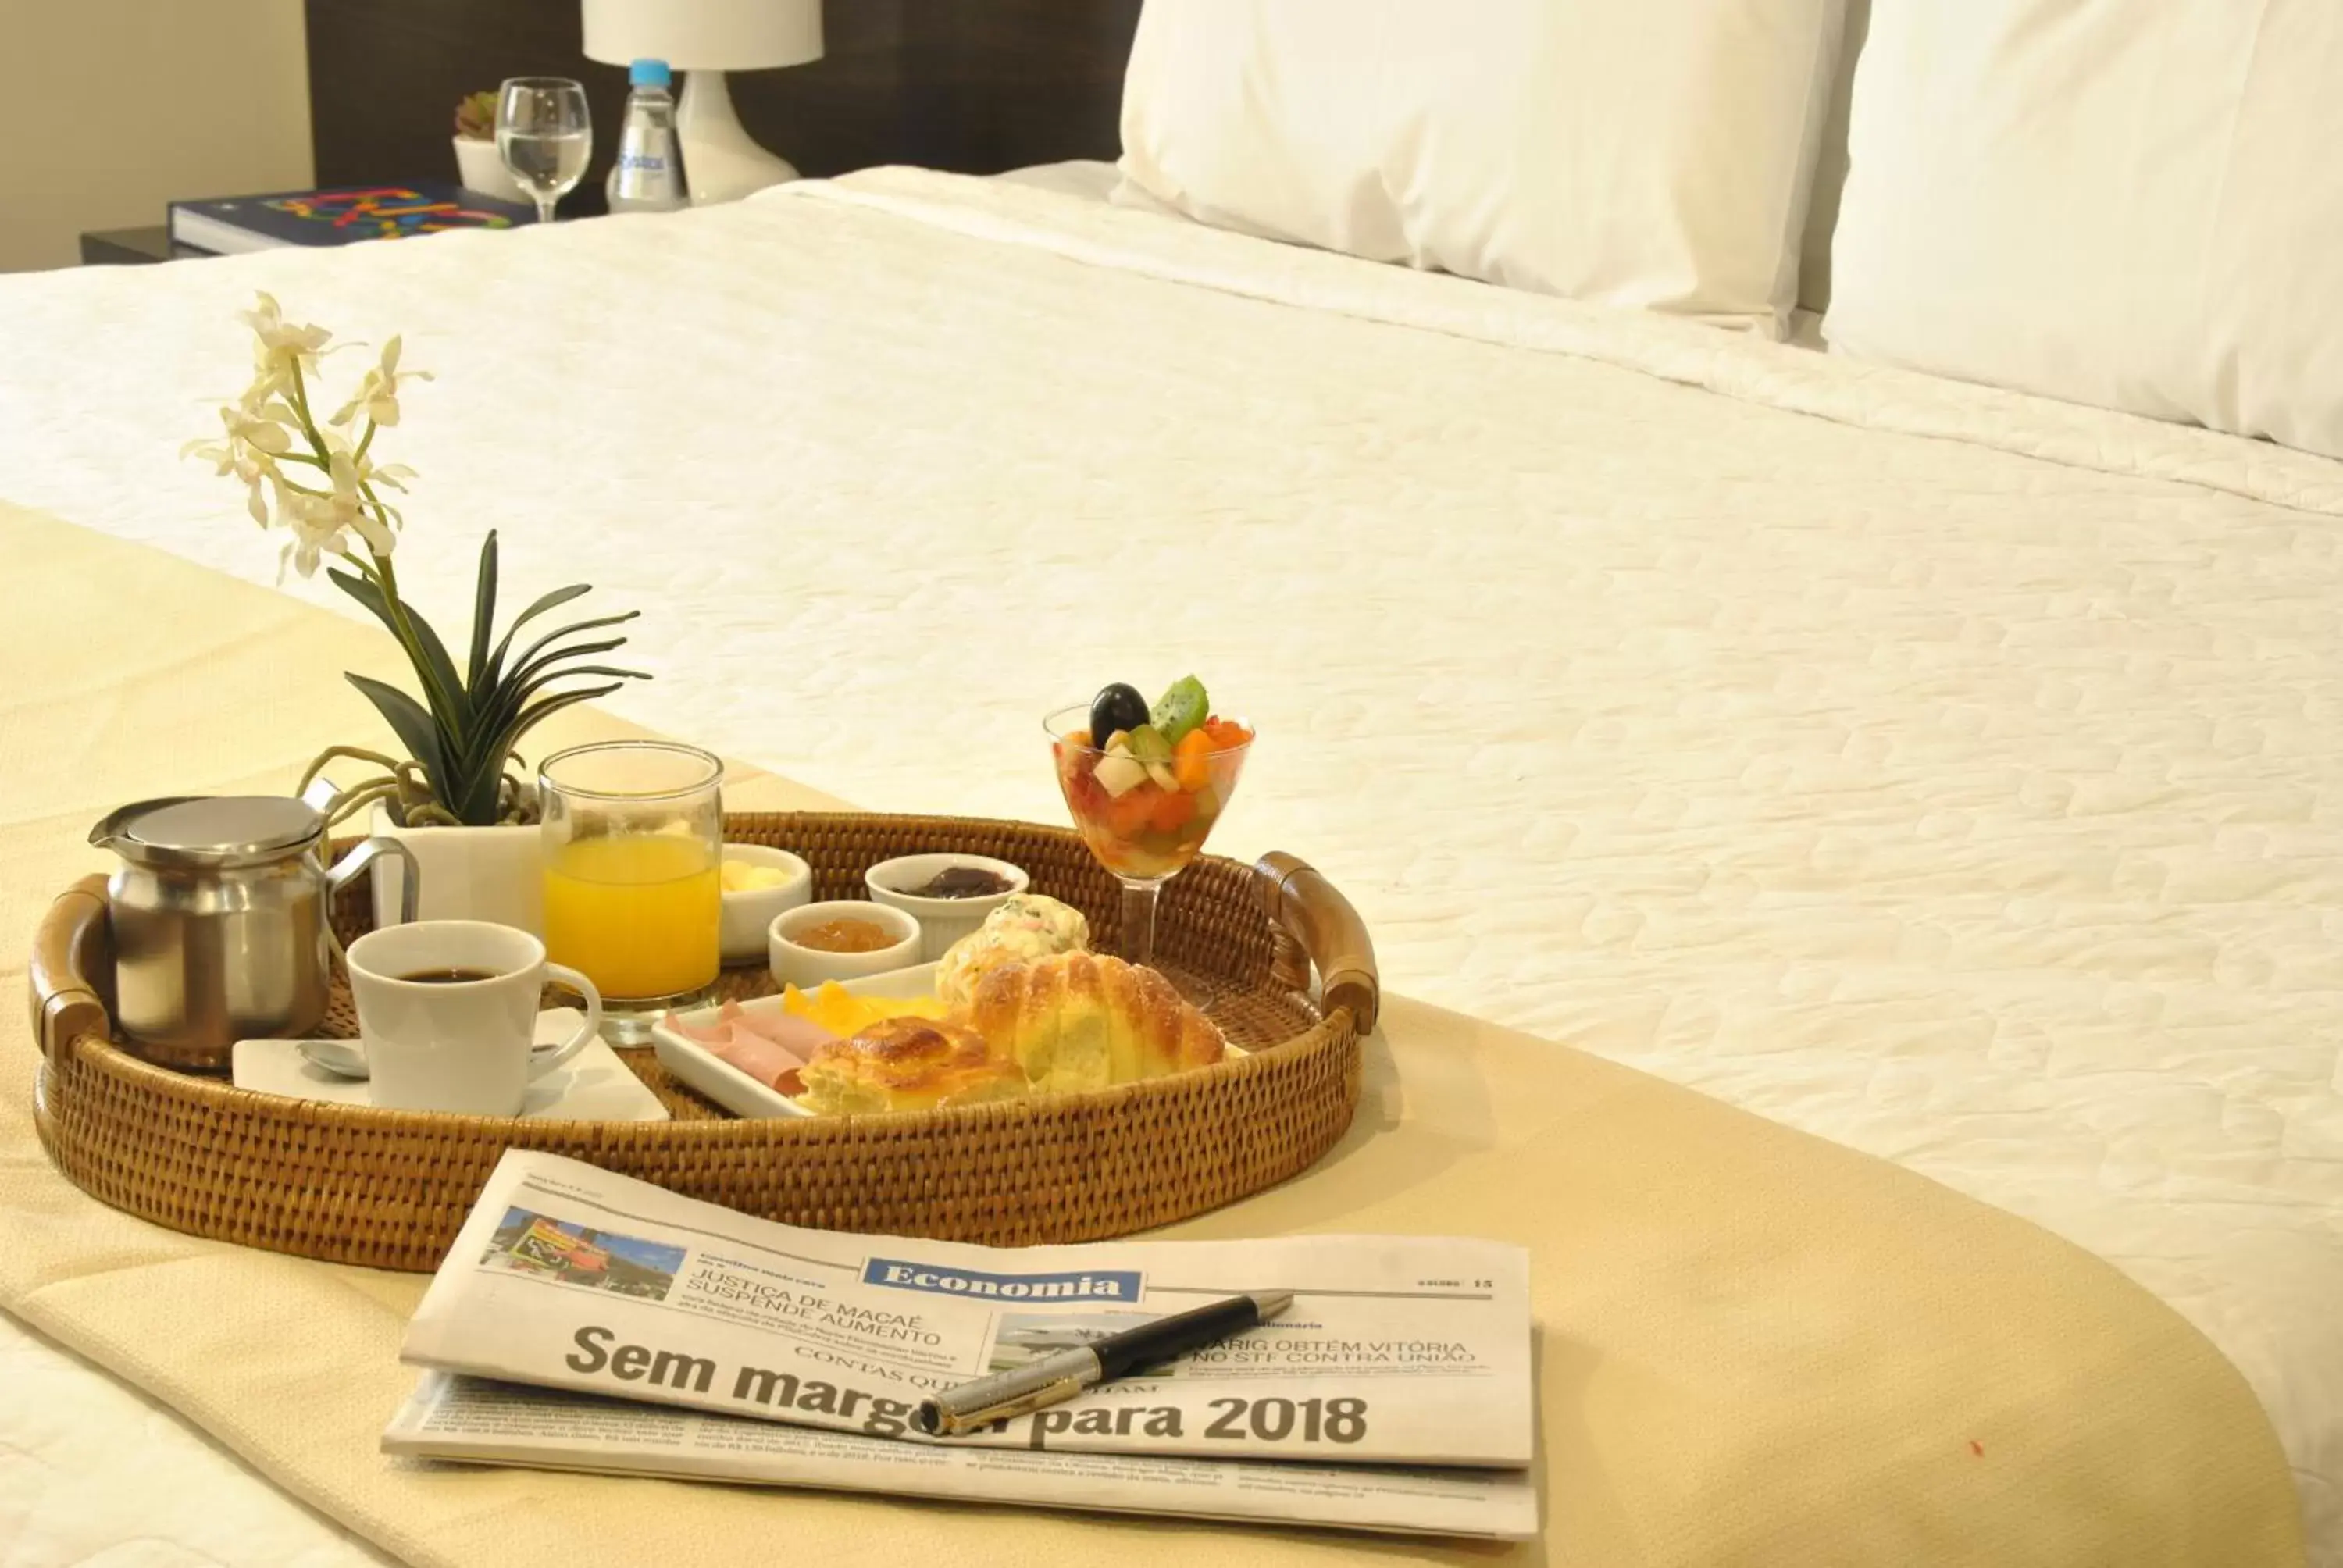 Breakfast, Bed in Arosa Rio Hotel